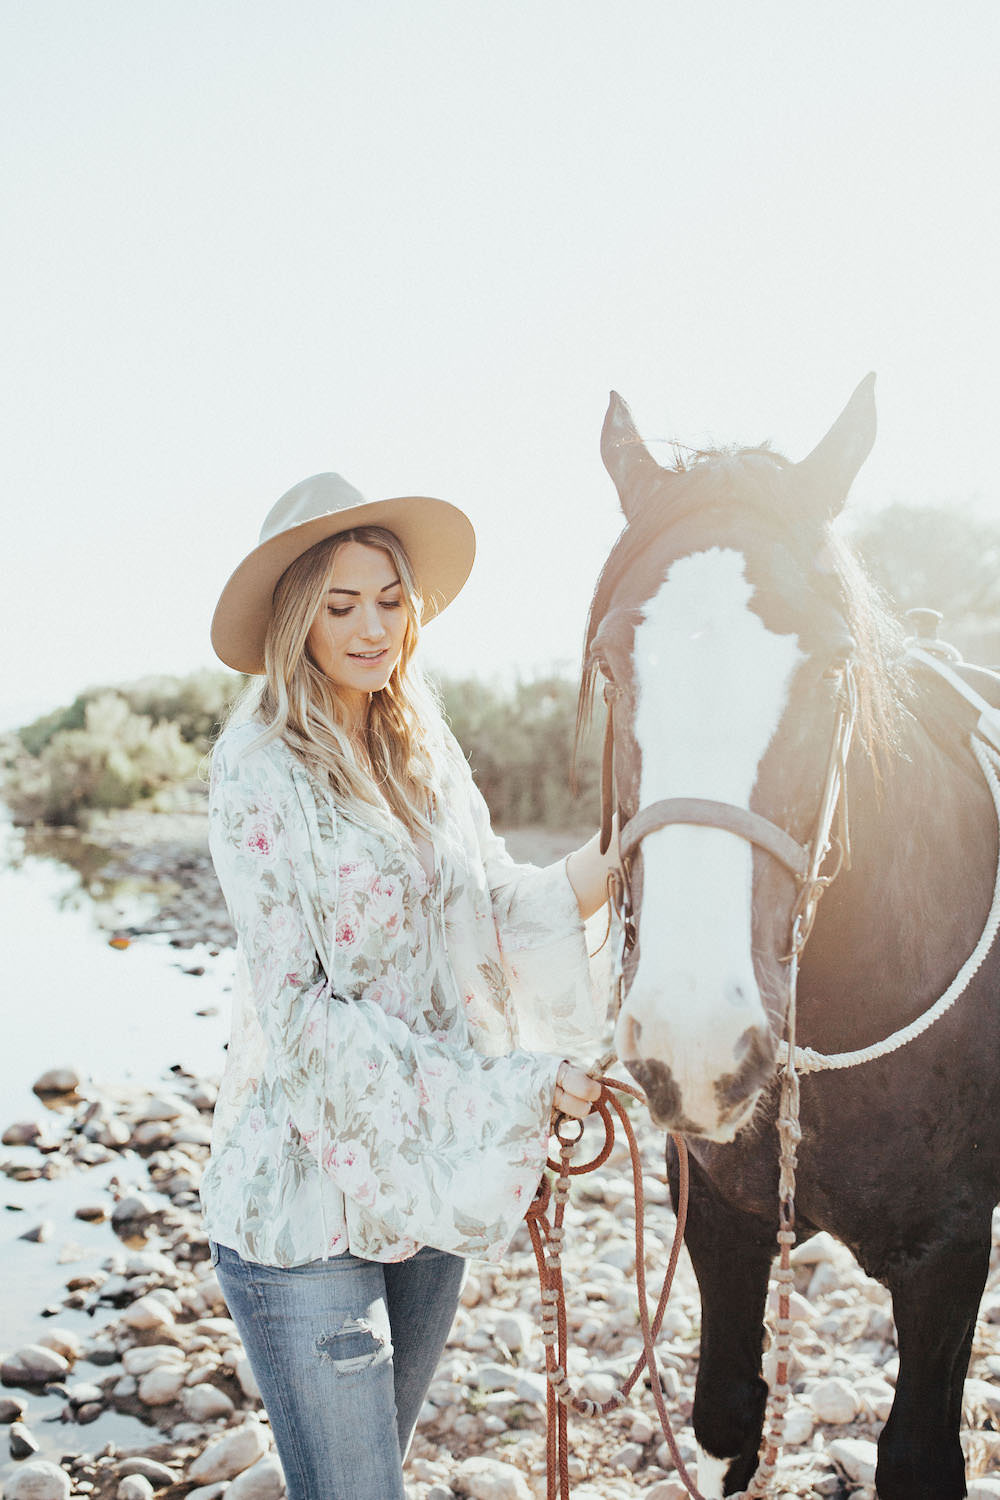 Dash of Darling | Arizona Horse Riding Adventure at Fort McDowell